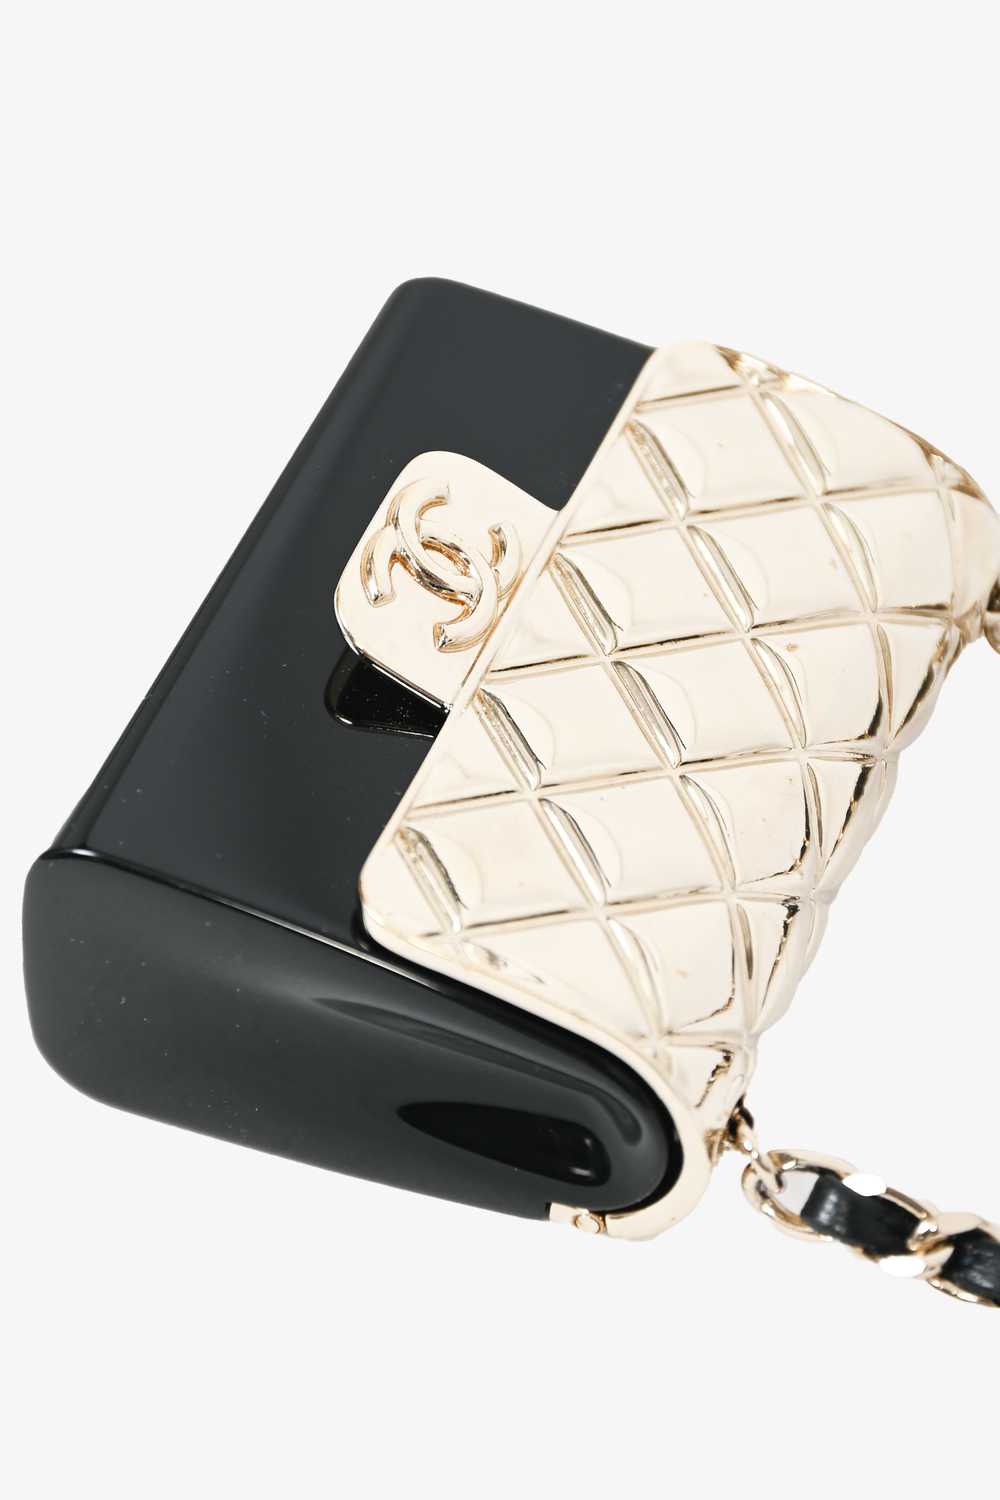 Pre-loved Chanel™ Black/Gold Mini Purse Necklace - image 6